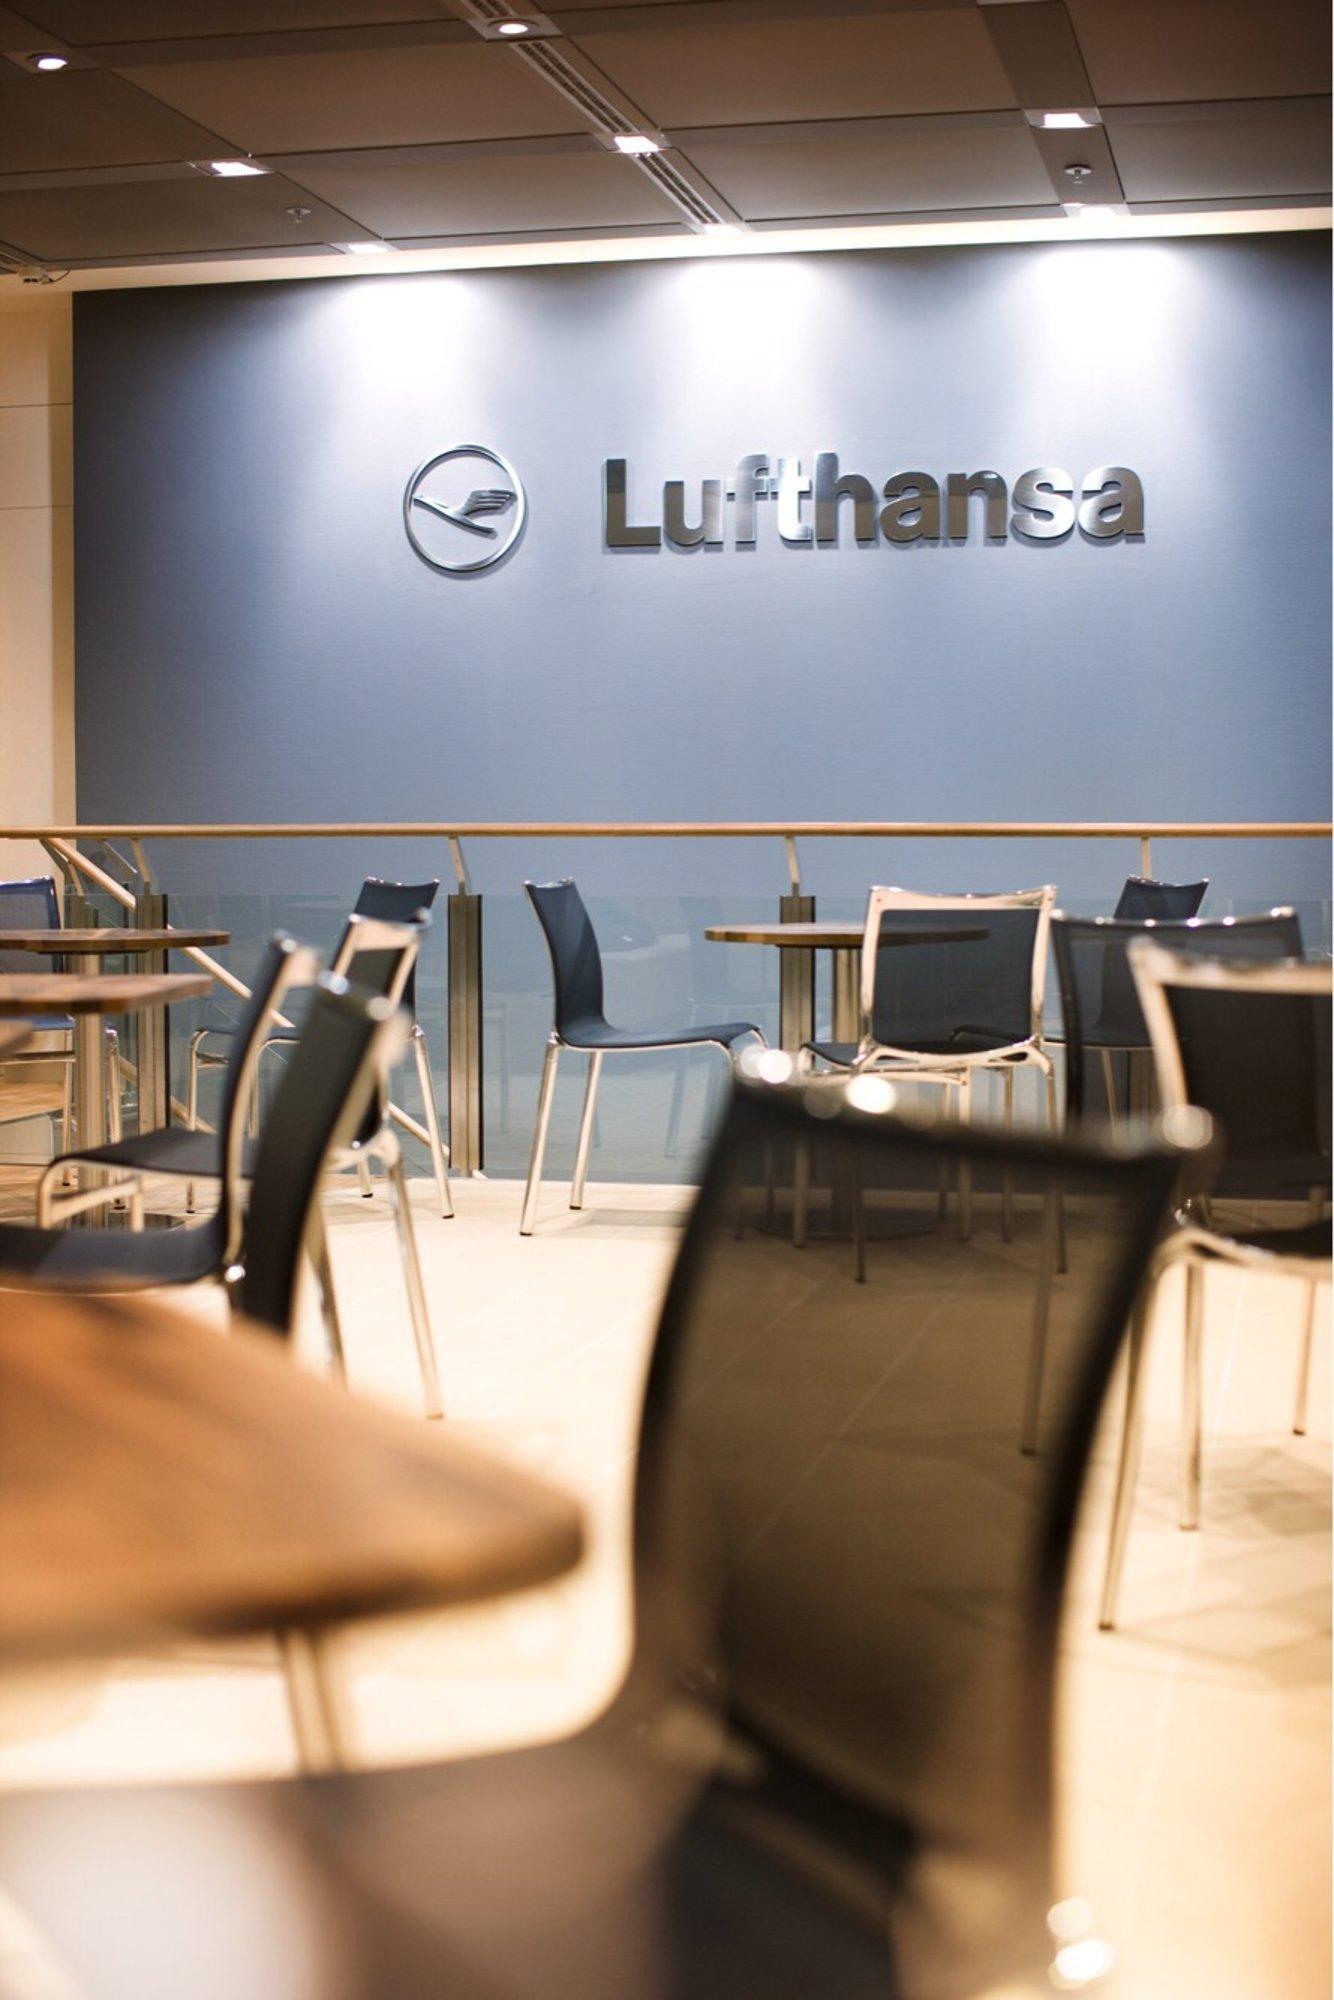 Lufthansa Welcome Lounge image 5 of 14